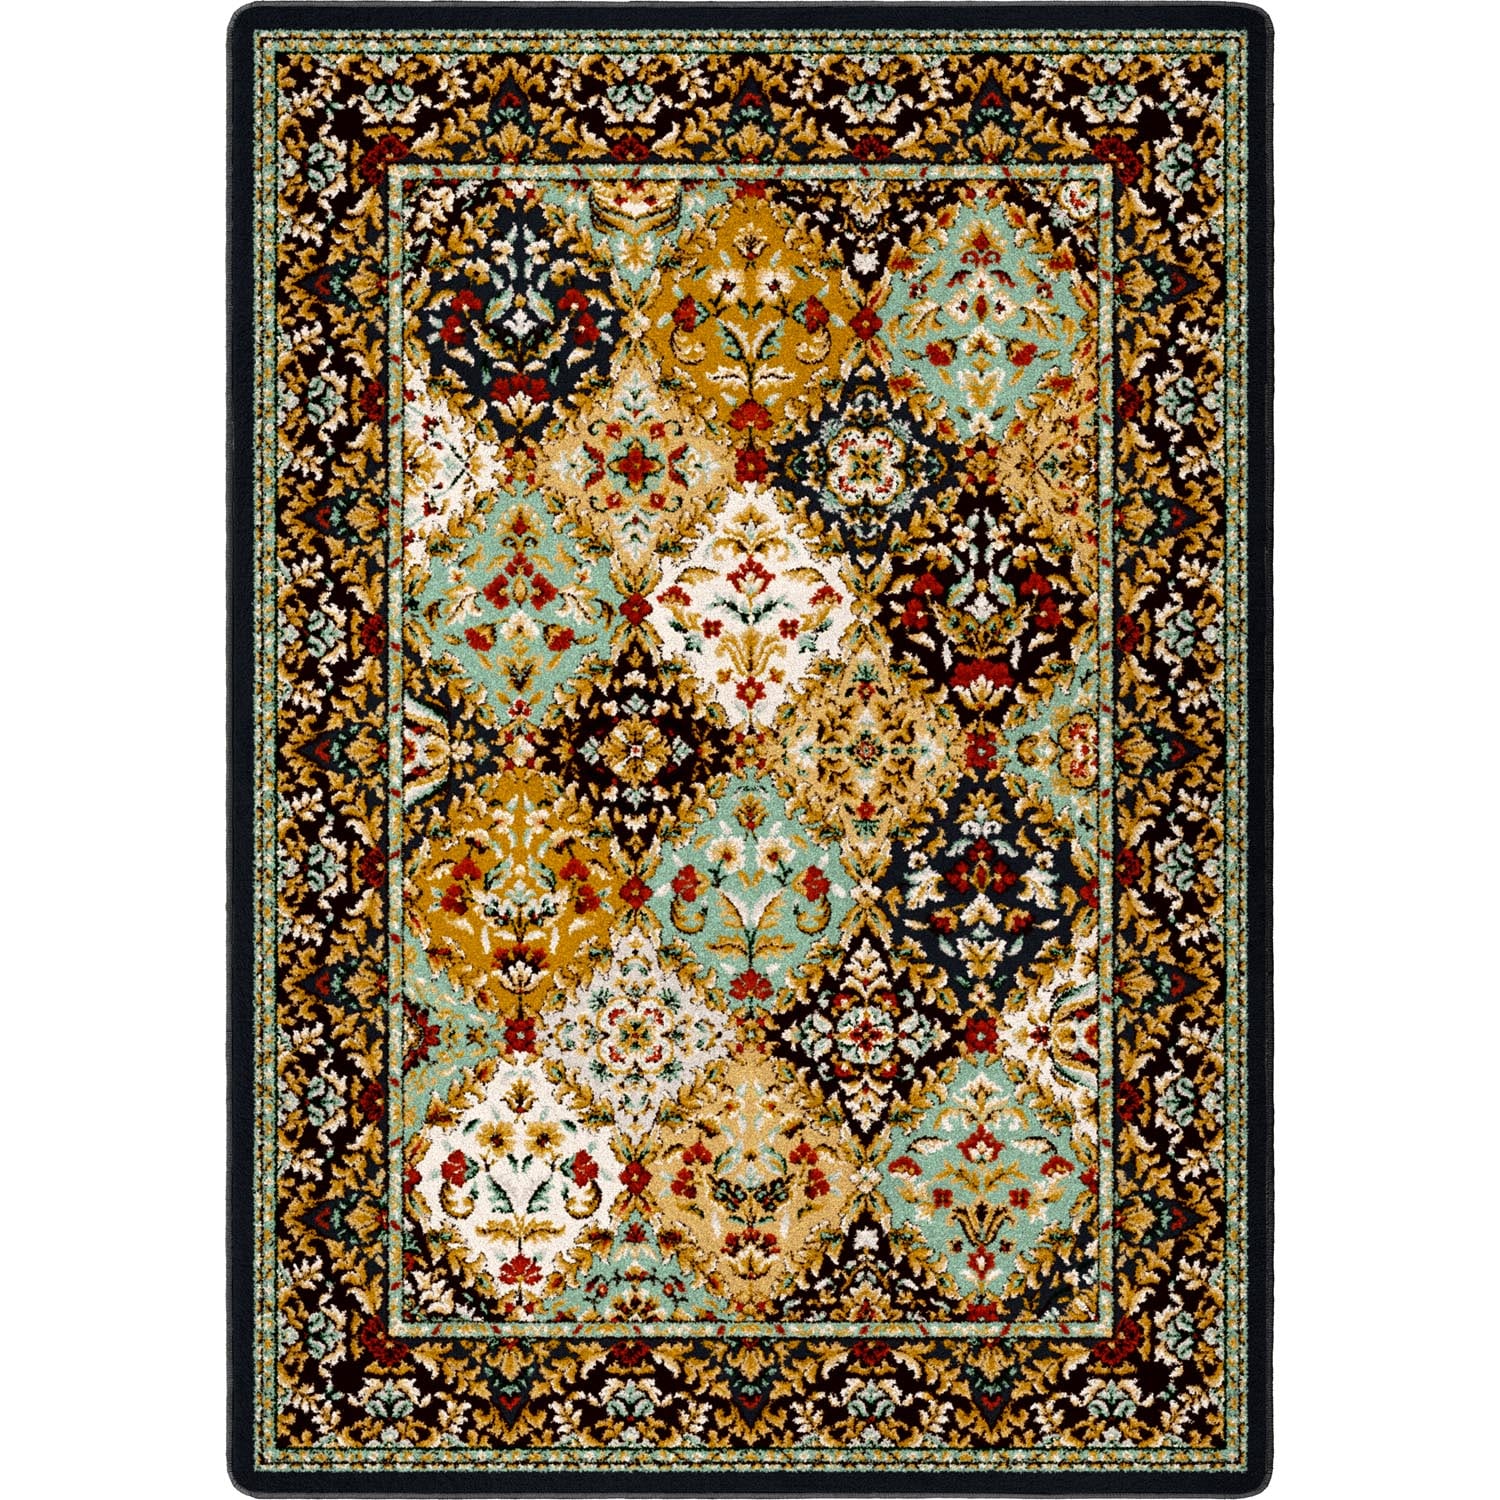 3' x 4' Badillo Multi Color Traditional Rectangle Scatter Nylon Area Rug -  Floor Rug - American Dakota